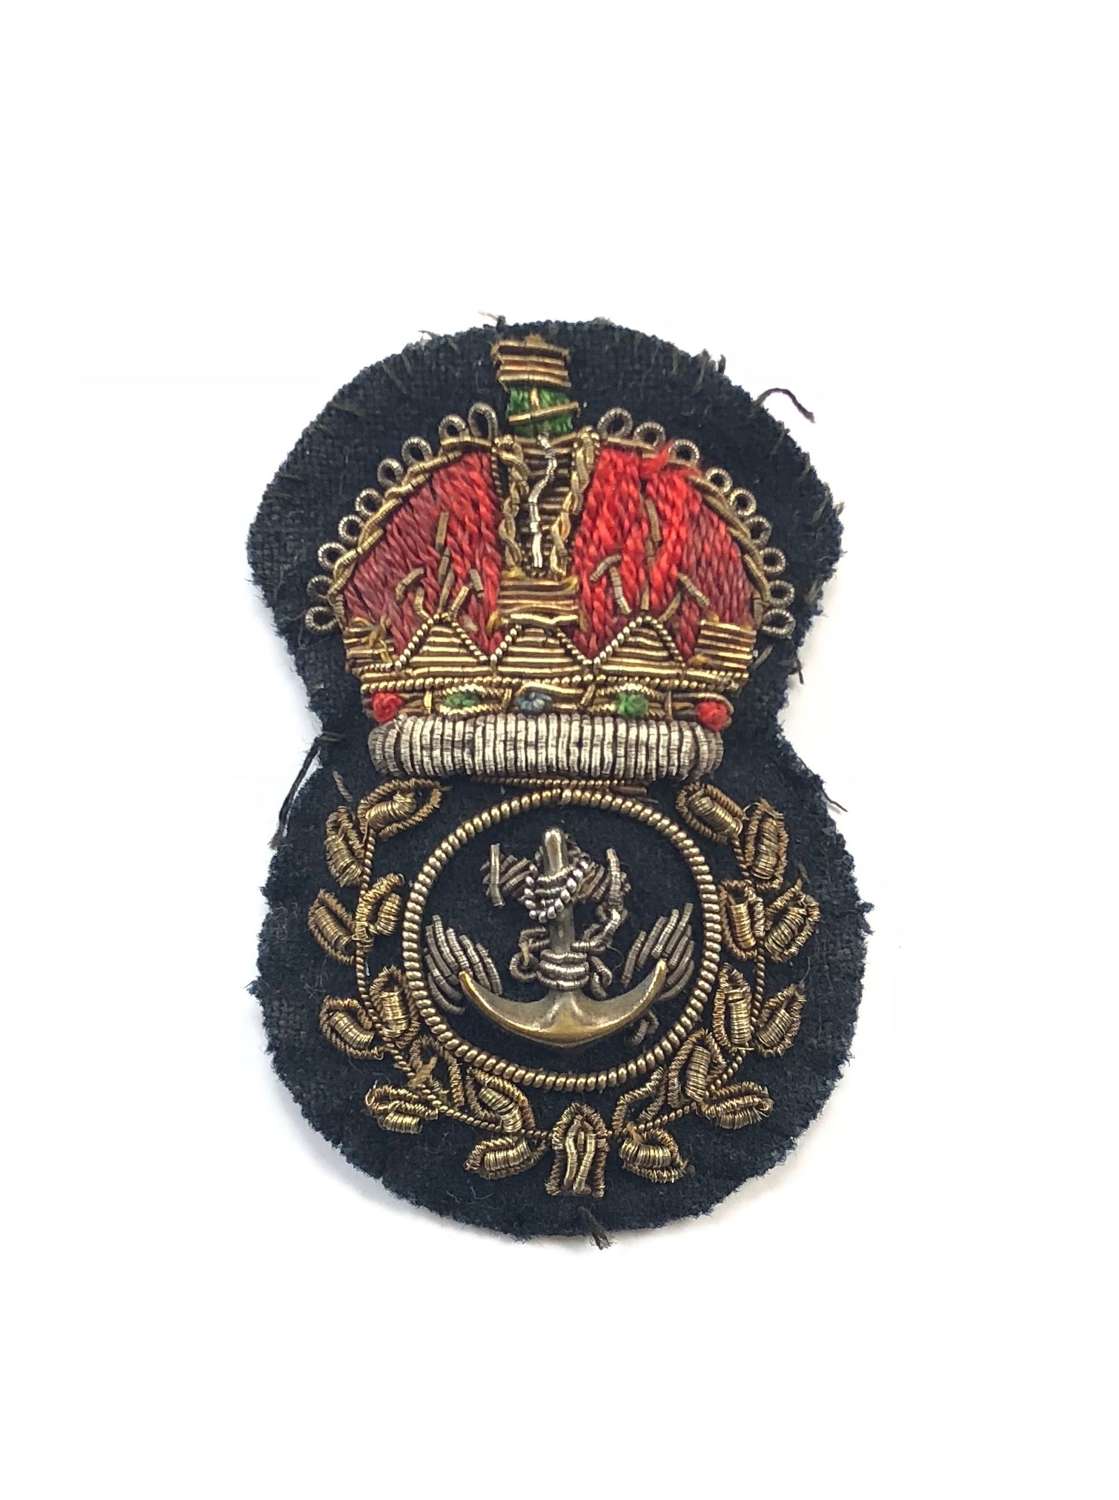 WW2 Period Royal Navy Chief Petty Officer Bullion Cap Badge.